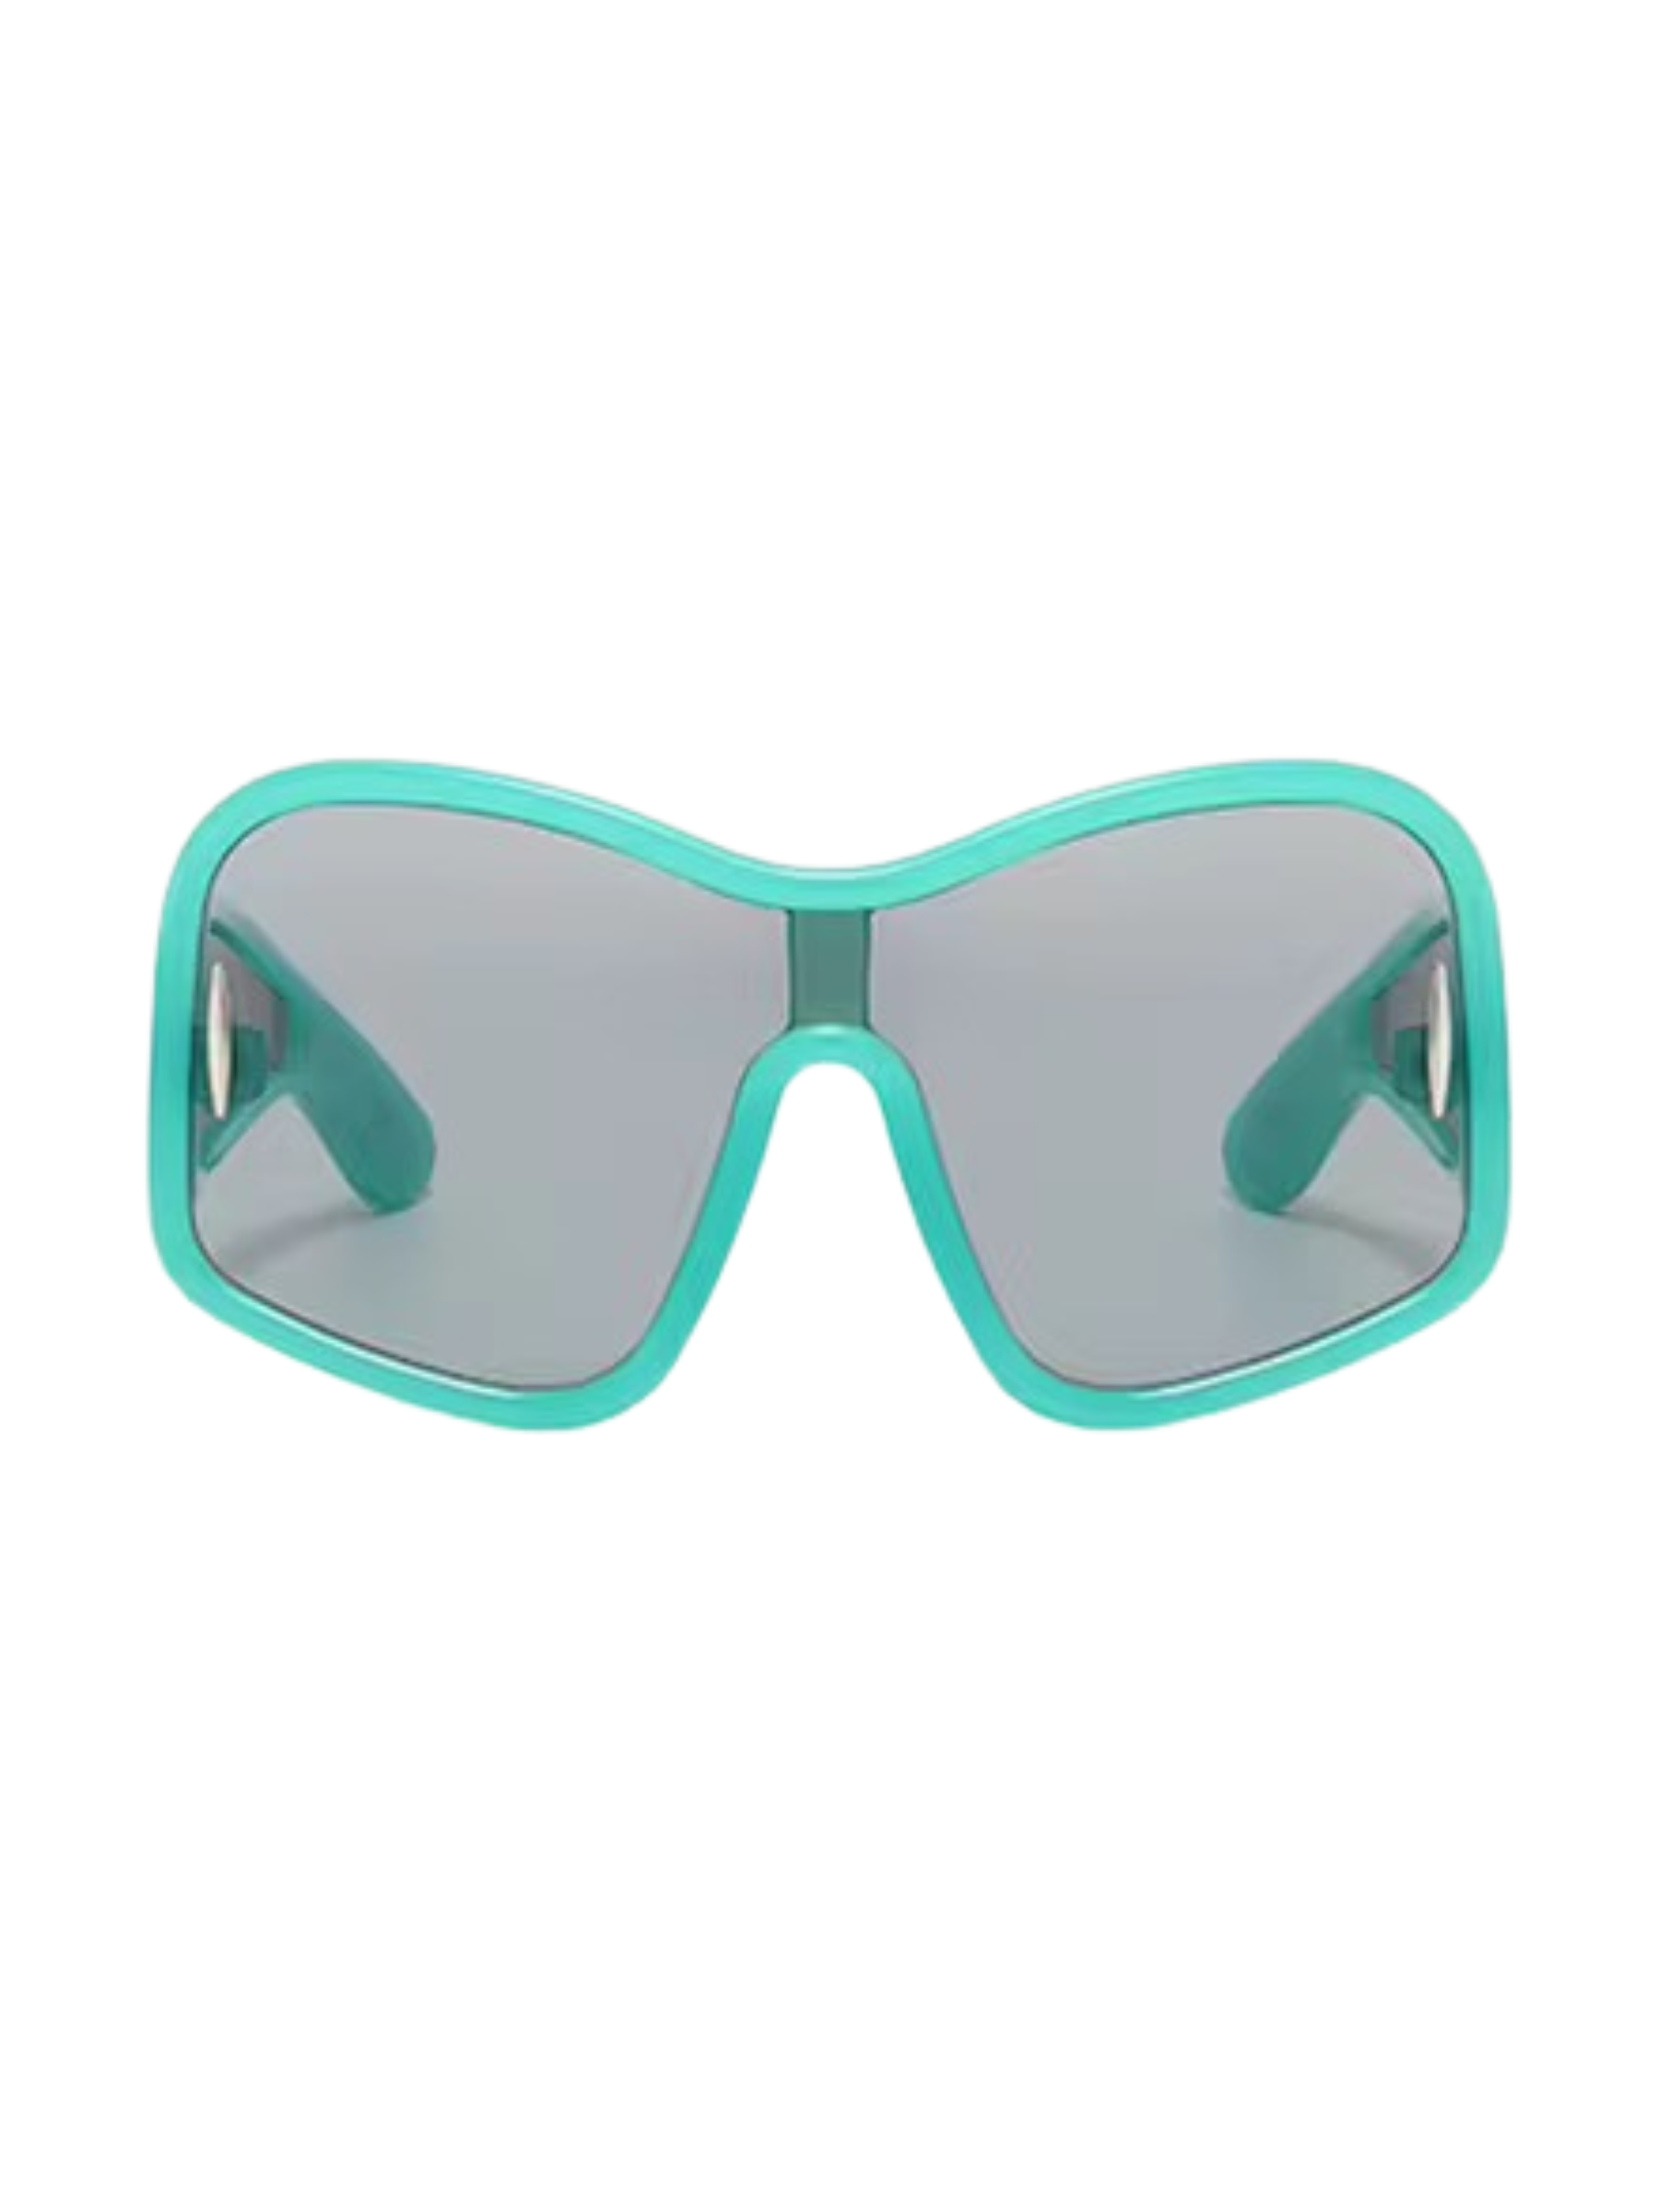 GOLDxTEAL oversized aqua blue sunglasses.